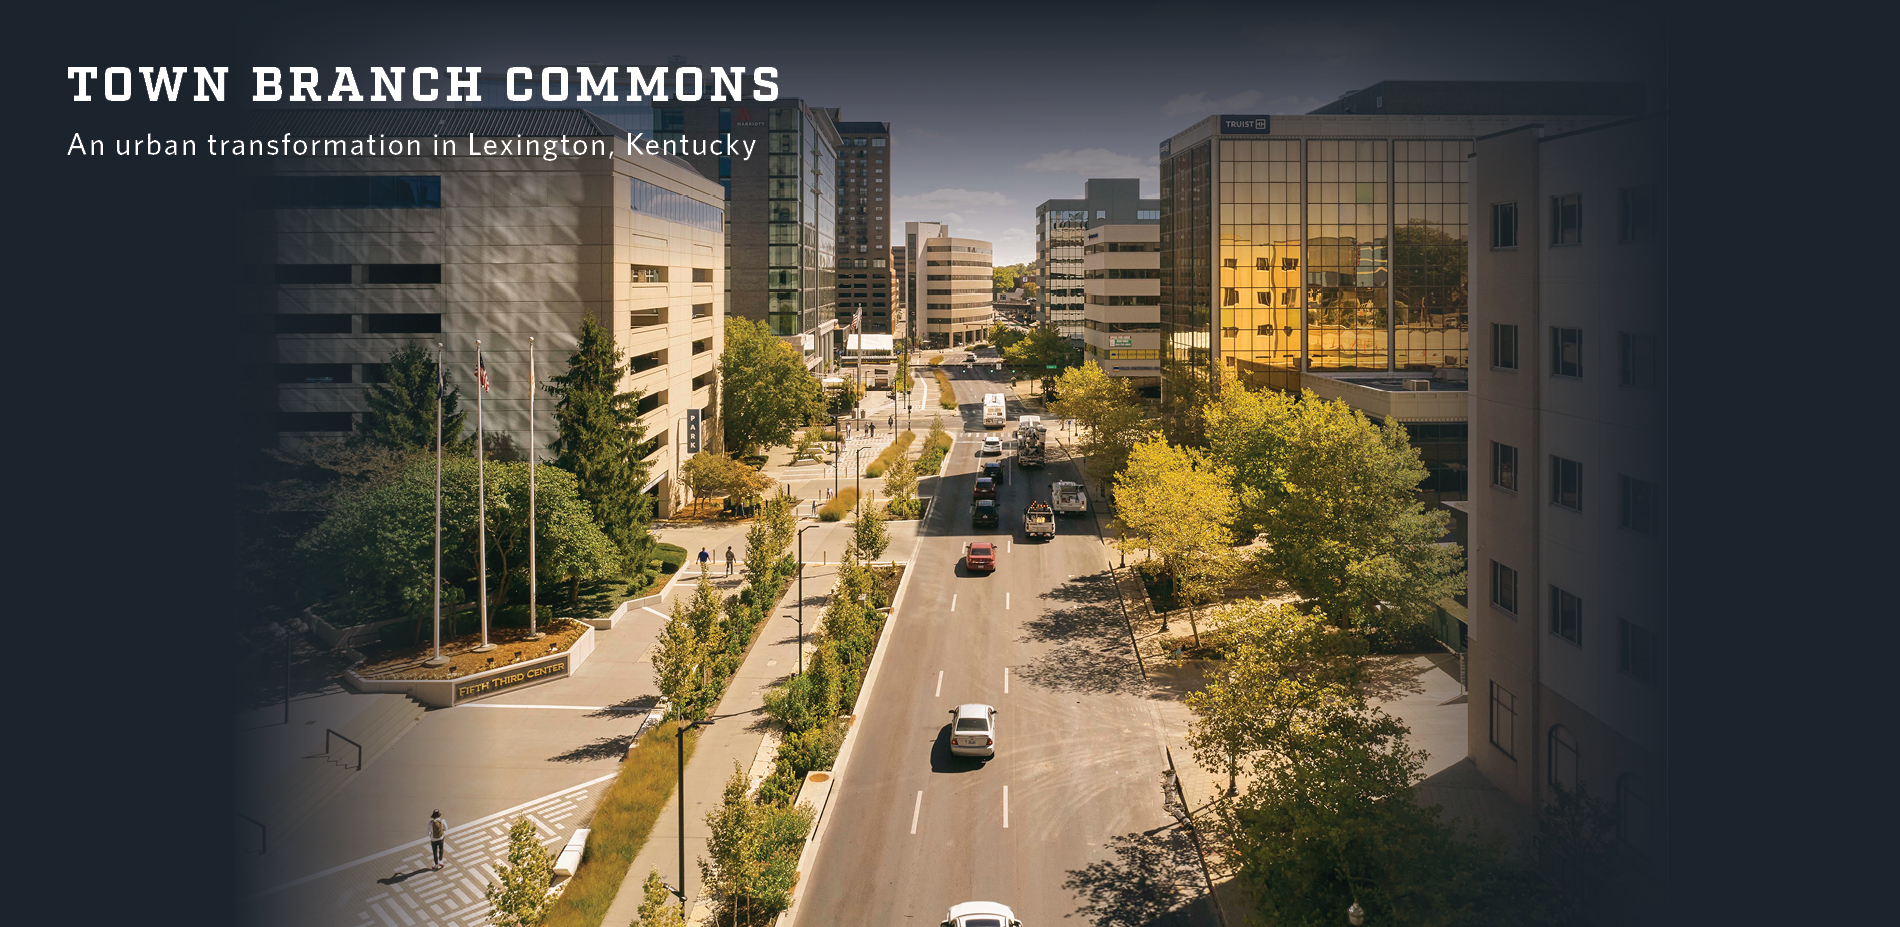 Town Branch Commons: An urban transformation in Lexington, Kentucky